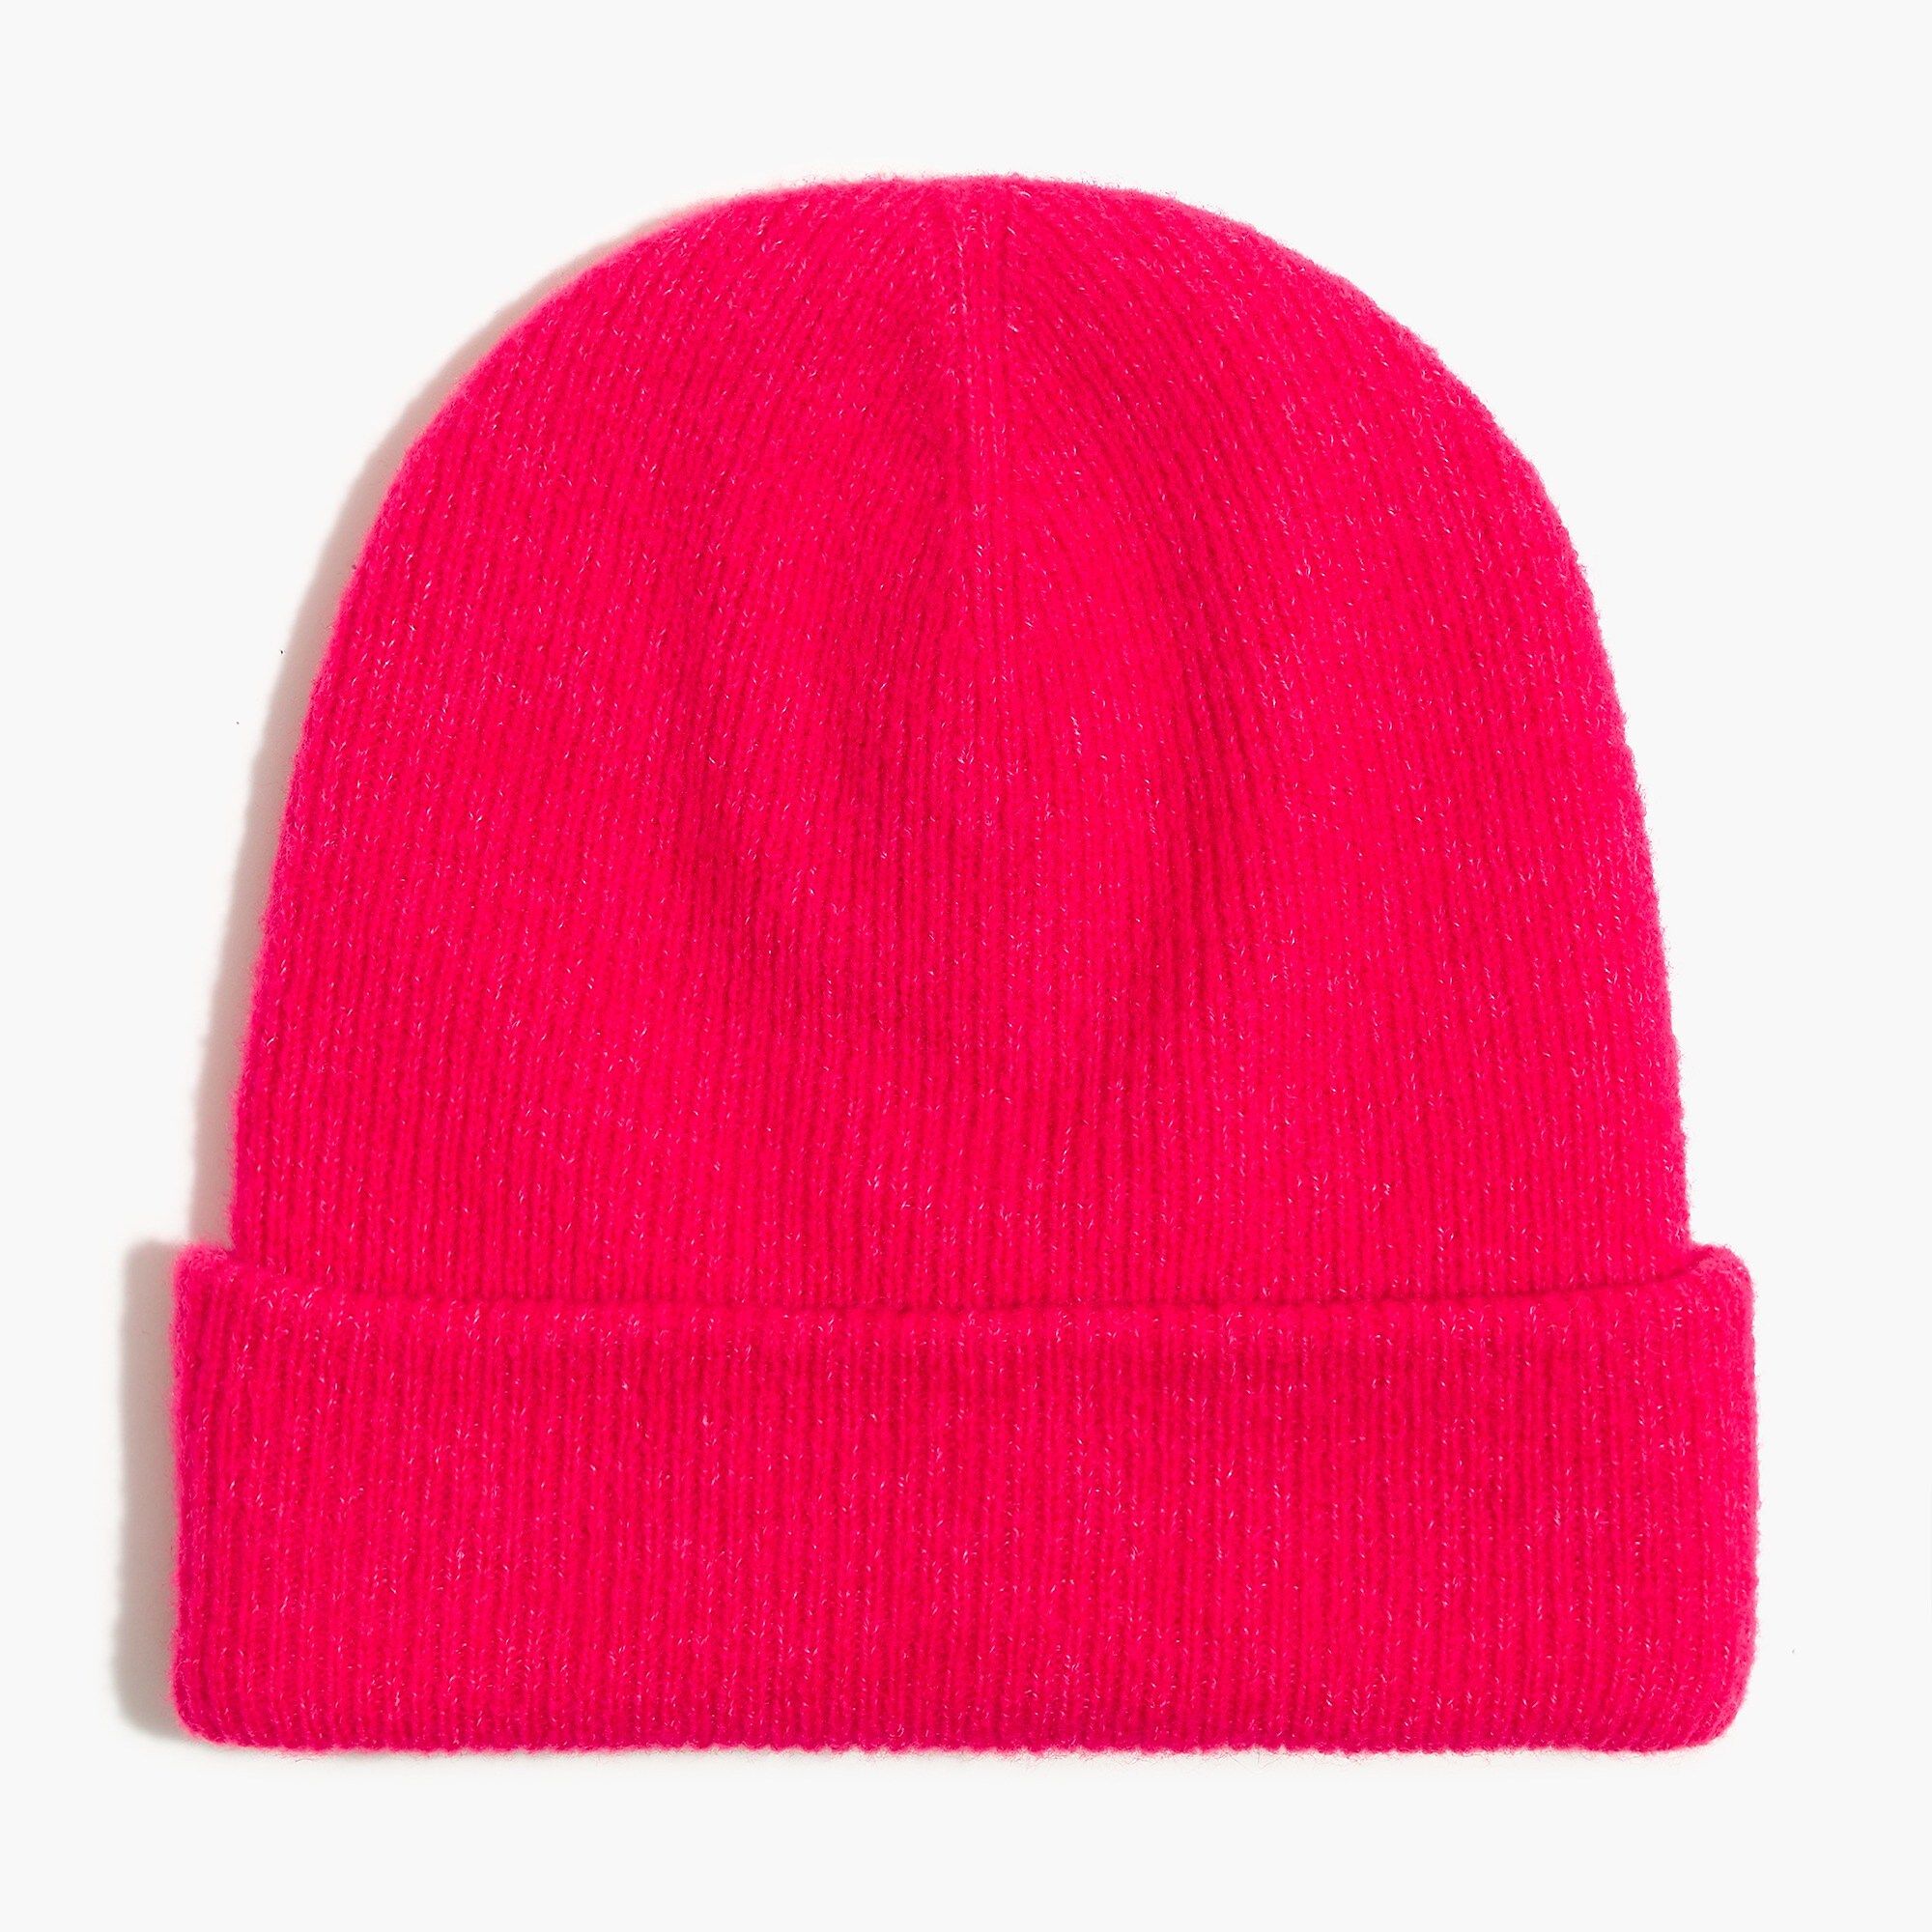 Beanie hat in extra-soft yarn | J.Crew Factory